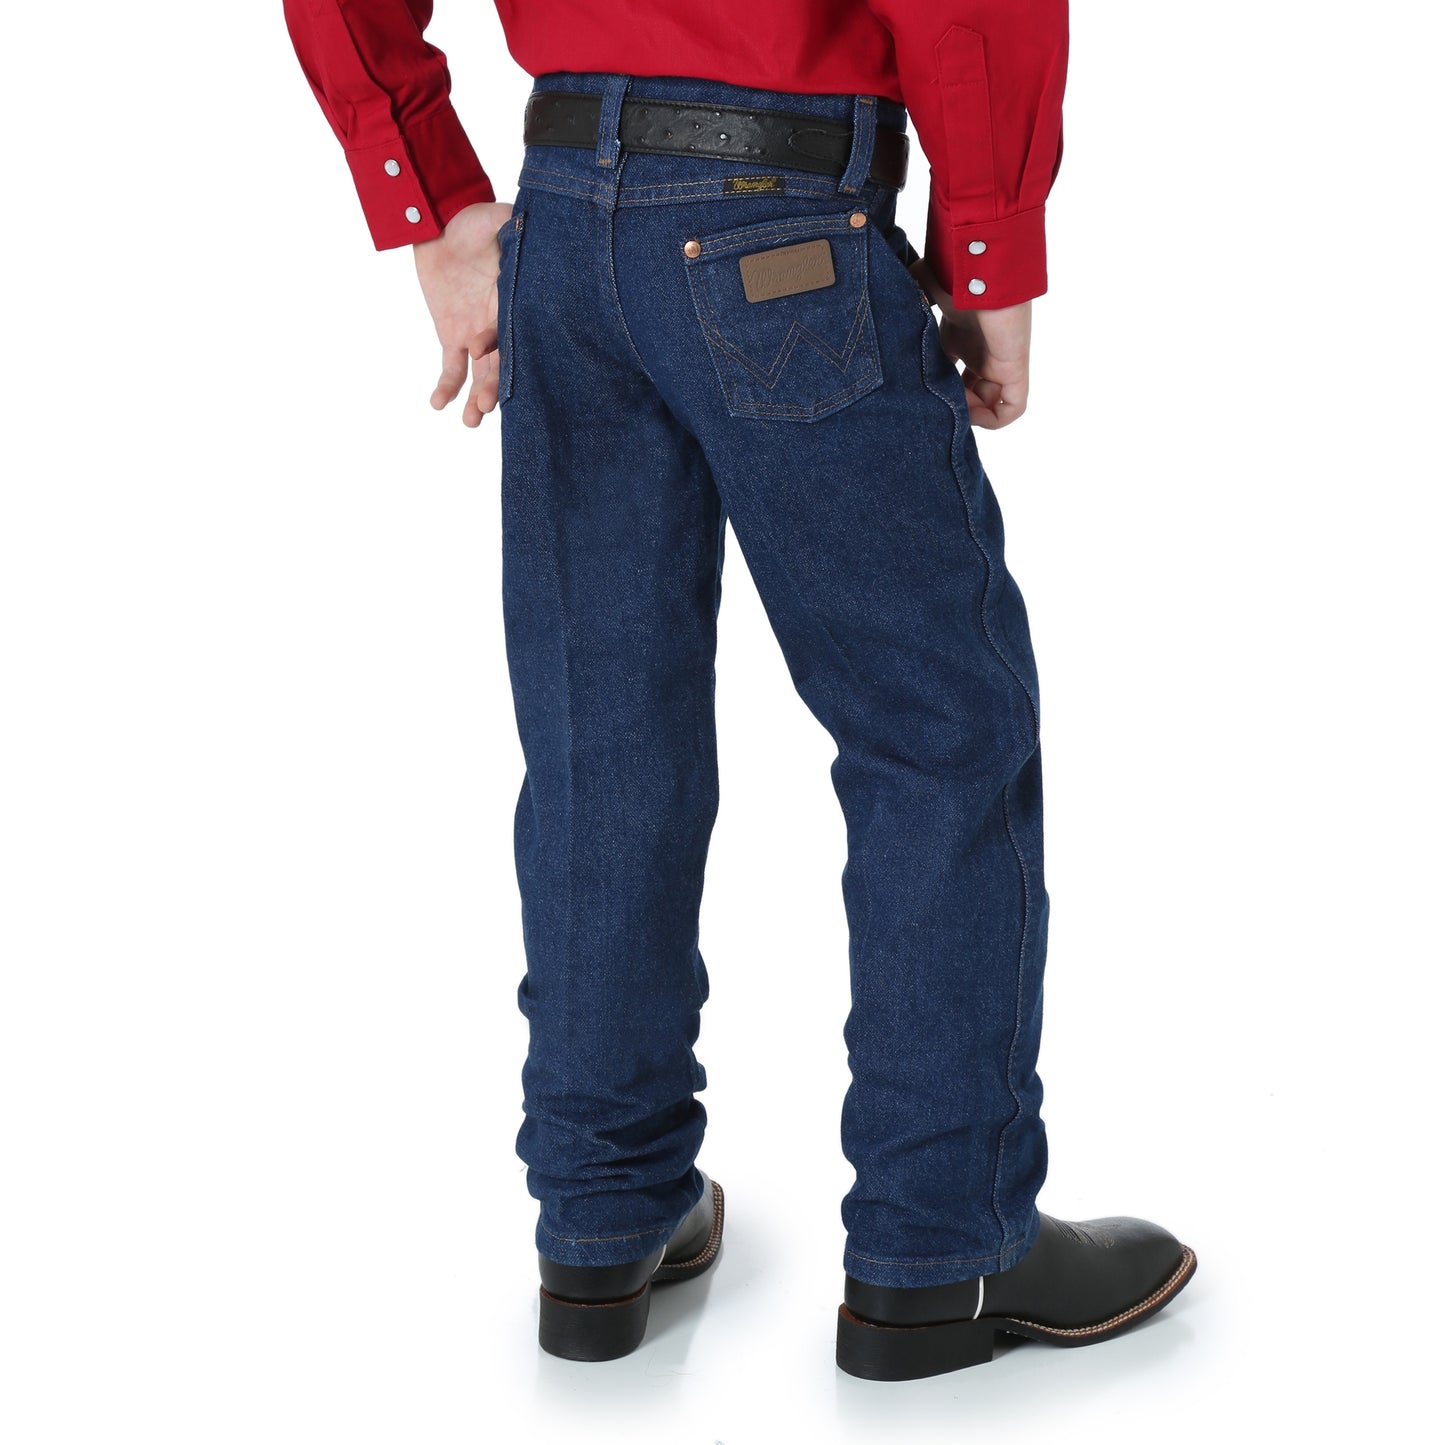 Wrangler Cowboy Cut Jeans Toddler Boys - Prewashed Indigo